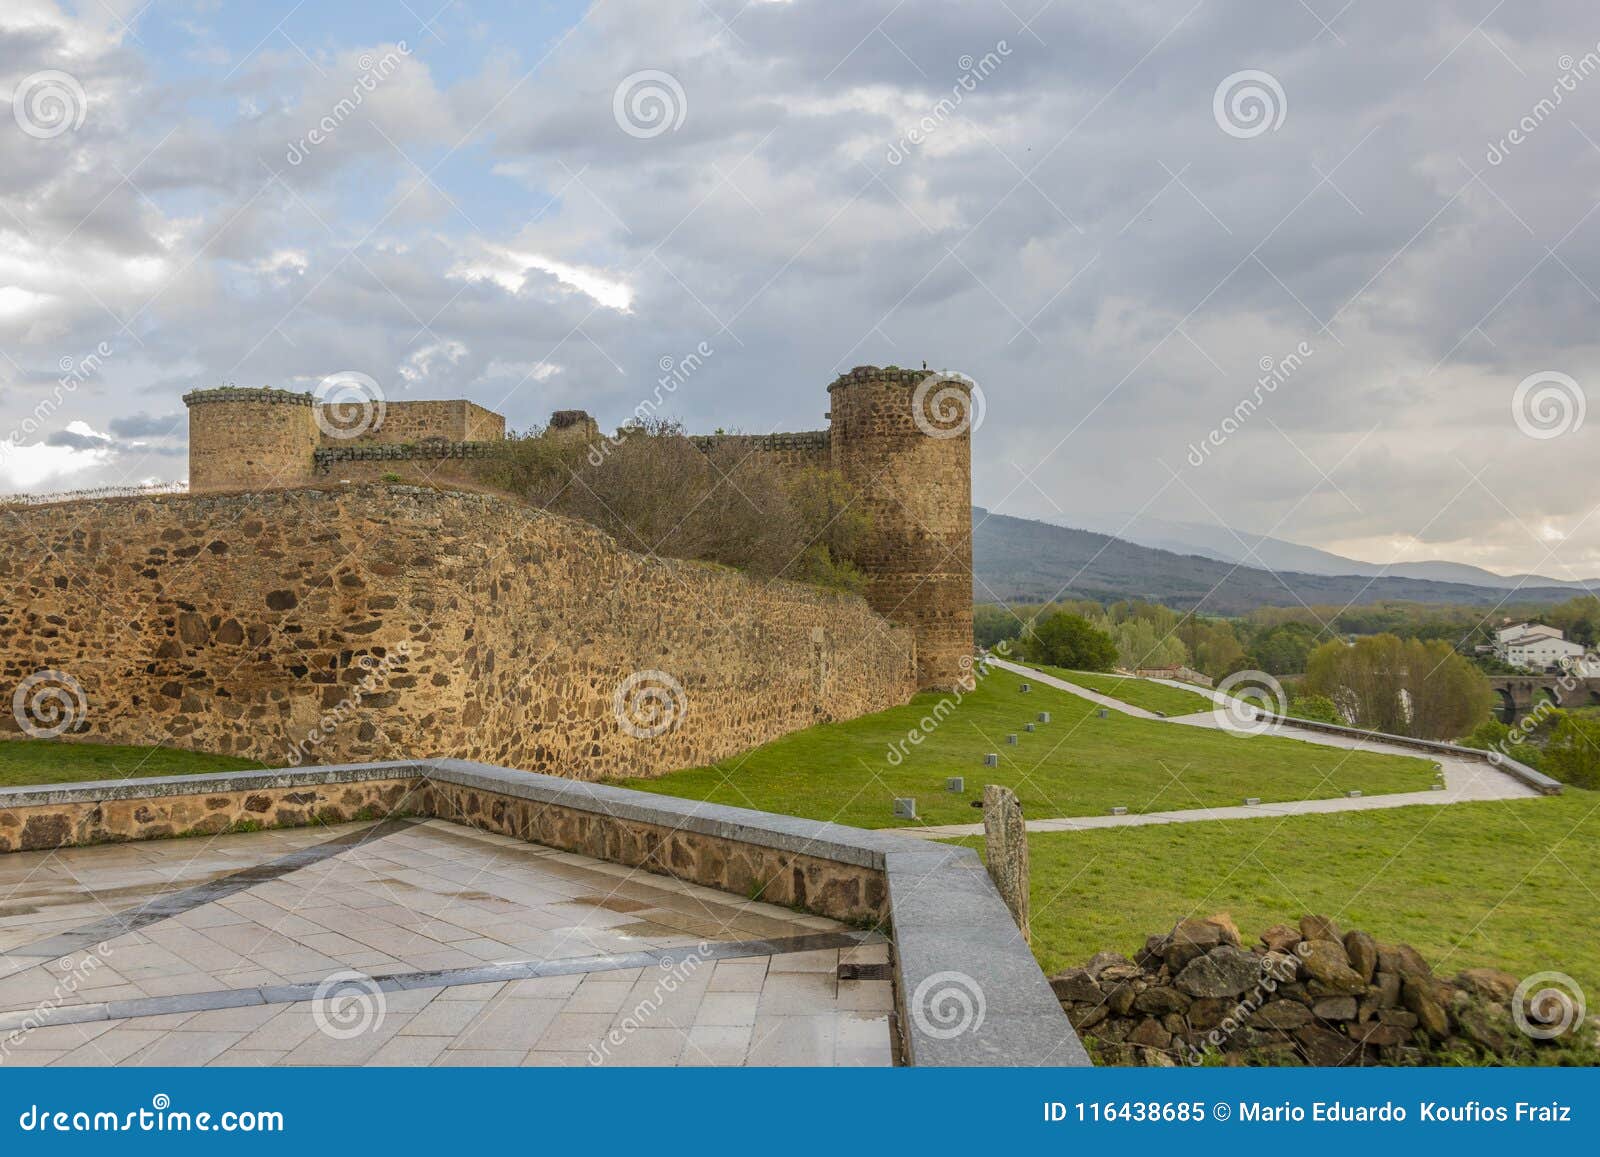 view of the castle of the town of el barco. castilla la mancha. spain